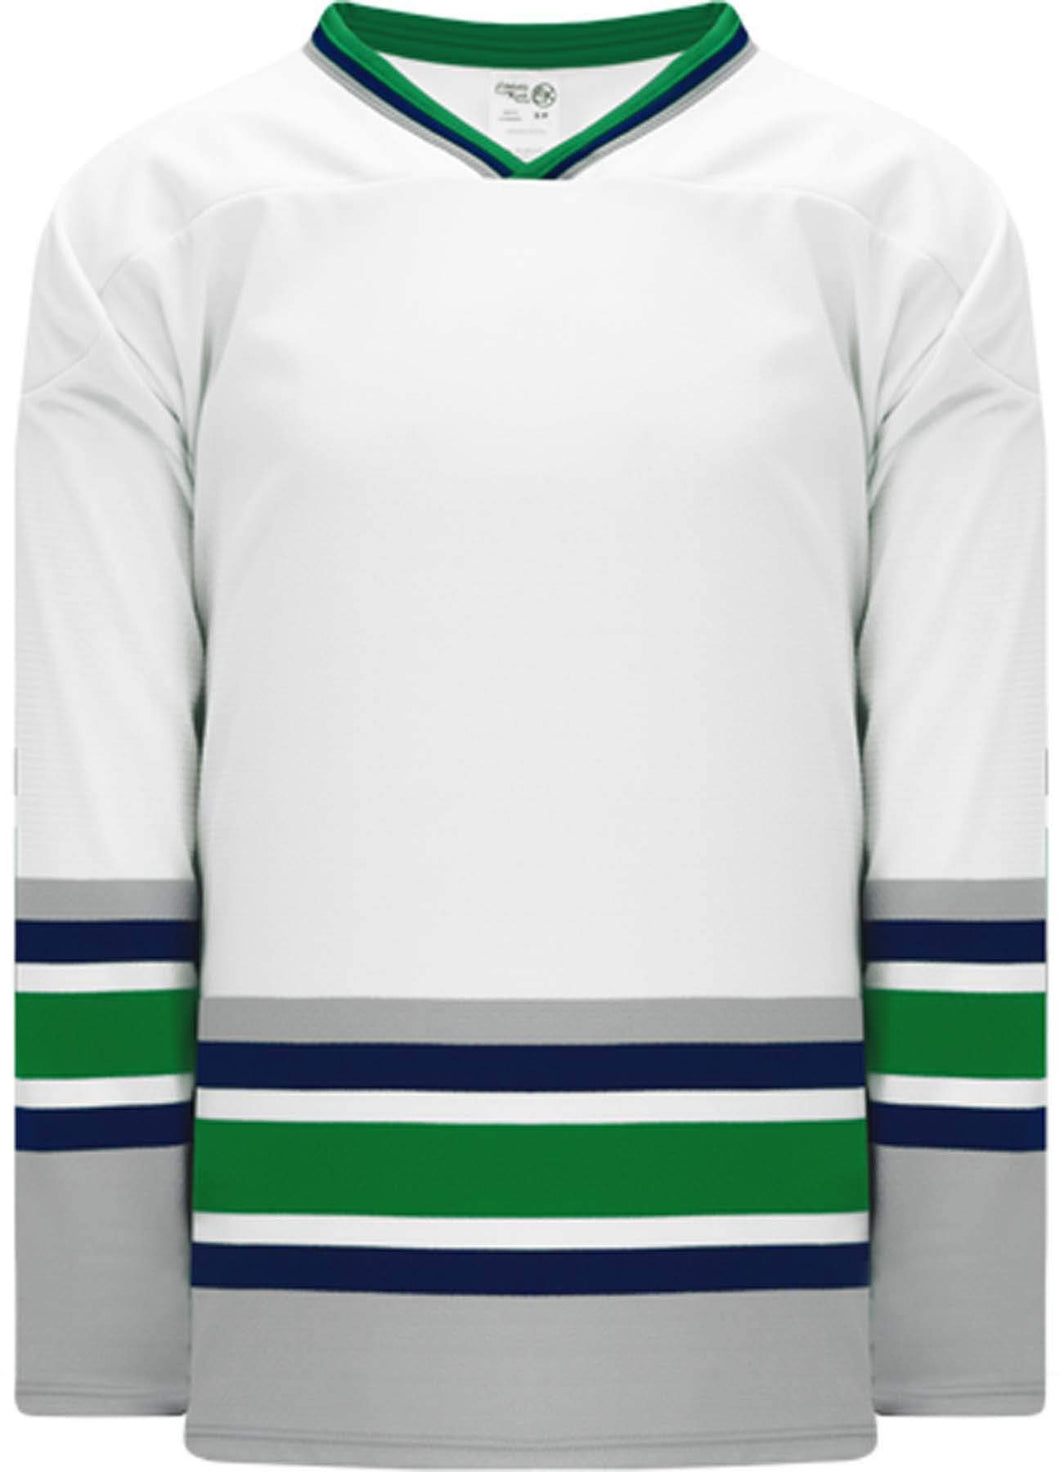 Hartford White Sleeve Stripes Pro Plain Blank Hockey Jerseys